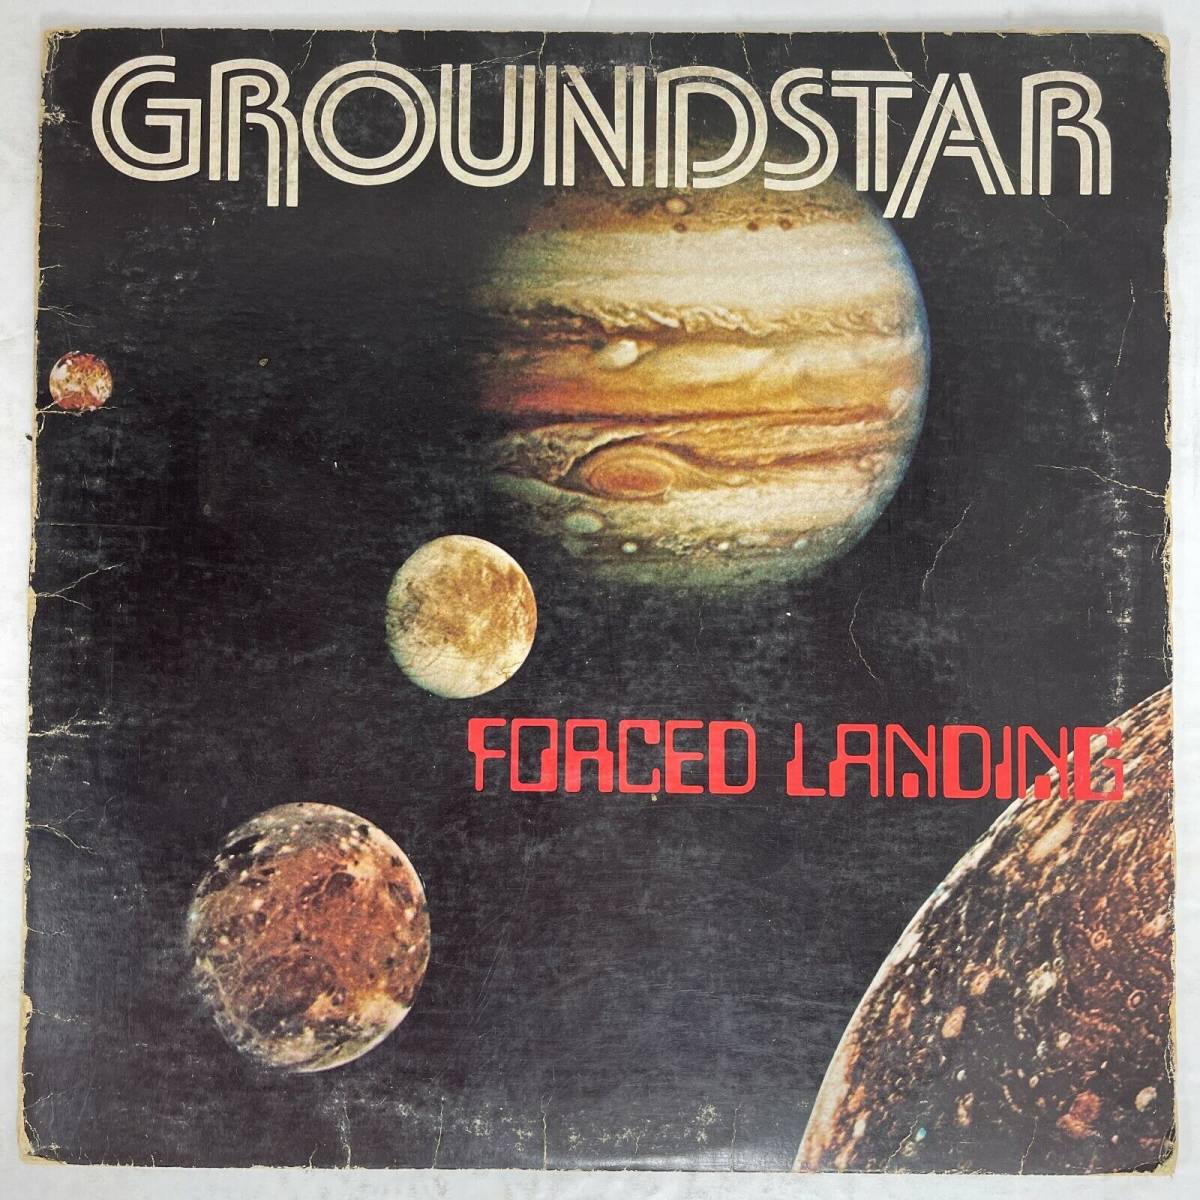 Groundstar Forced Landing Vinyl, LP 1980 Stellar Records SR 2549 海外 即決